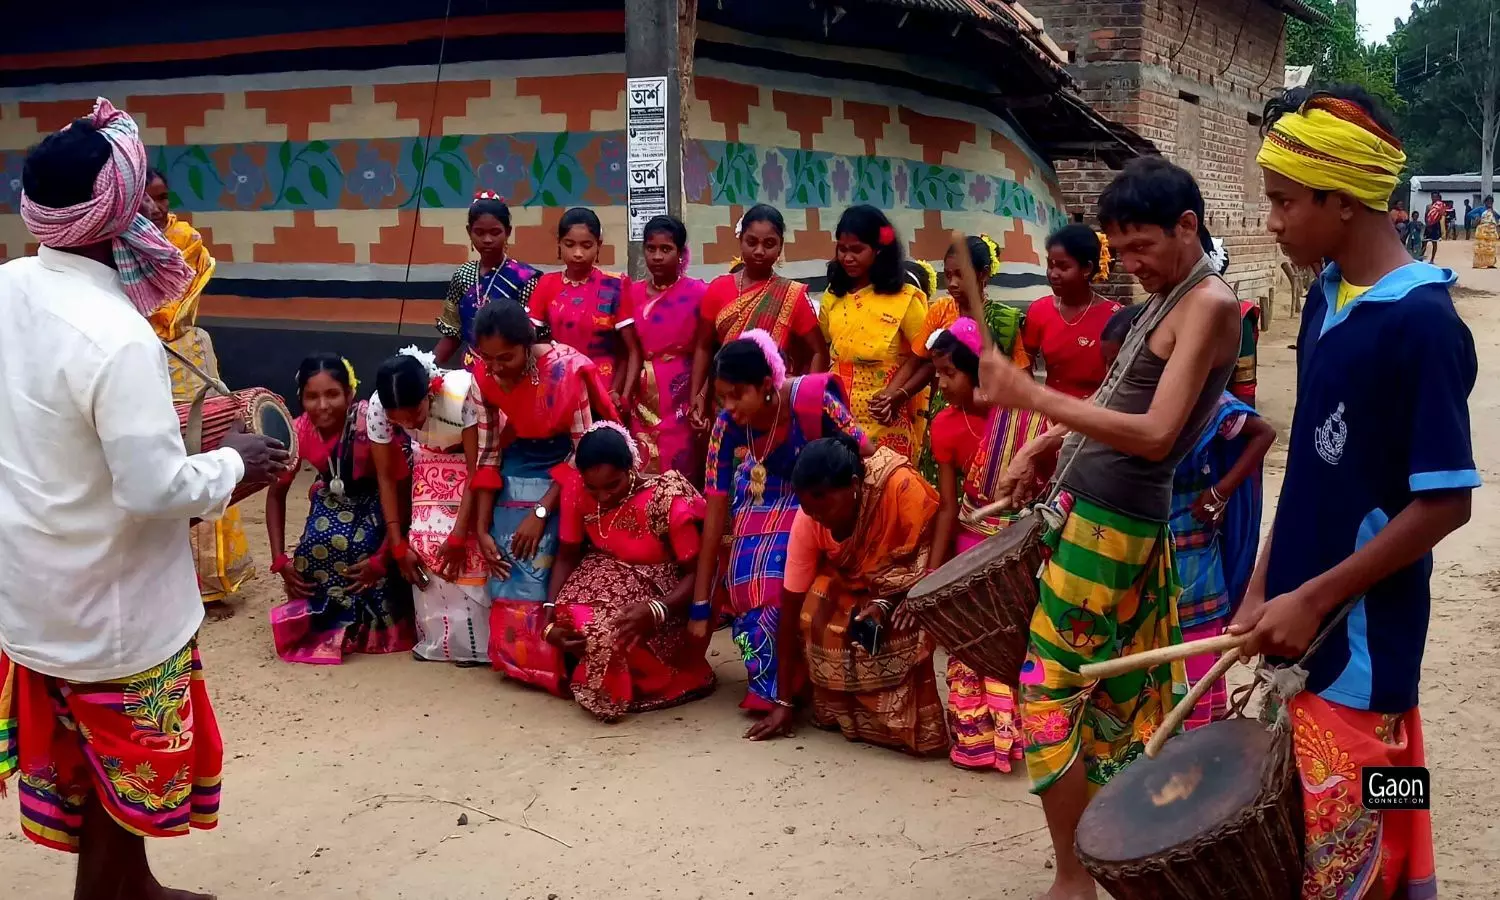 Bandhna Parob, the Bonding Festival of Tribal Communities in Jangalmahal